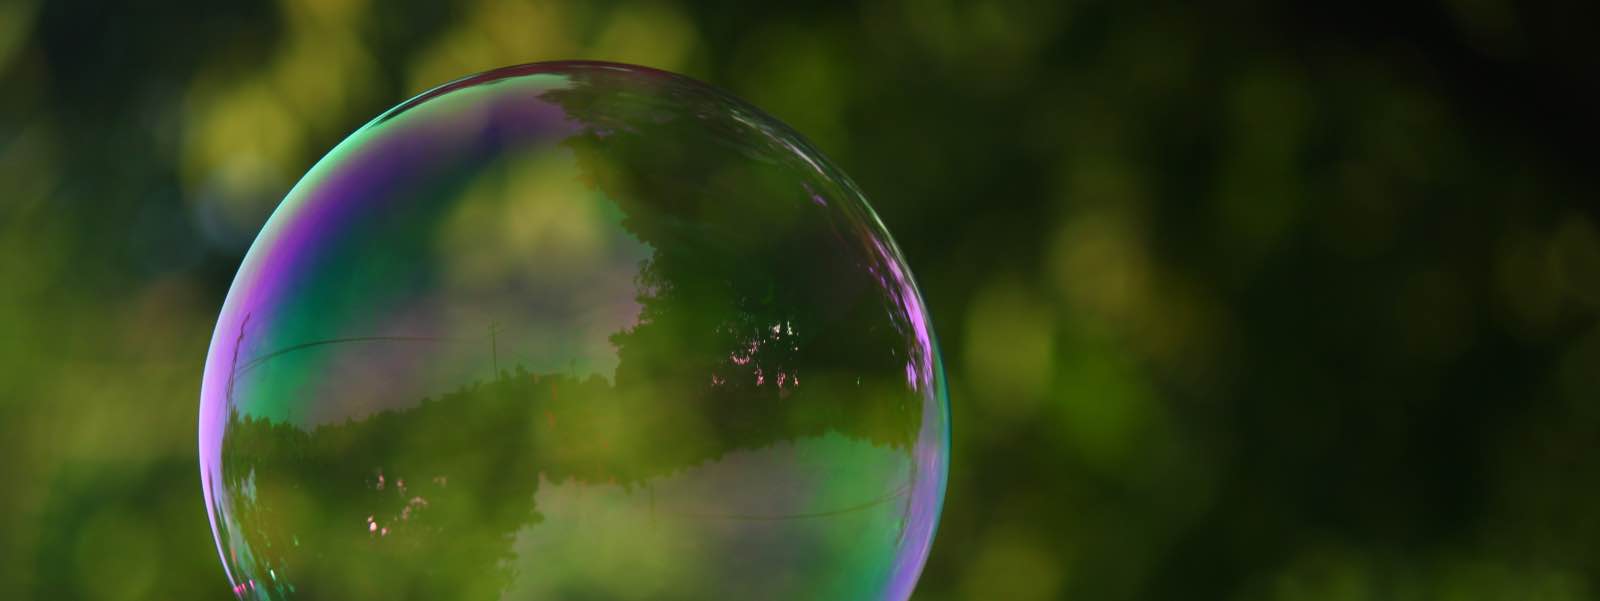 Close-up photo of a bubble